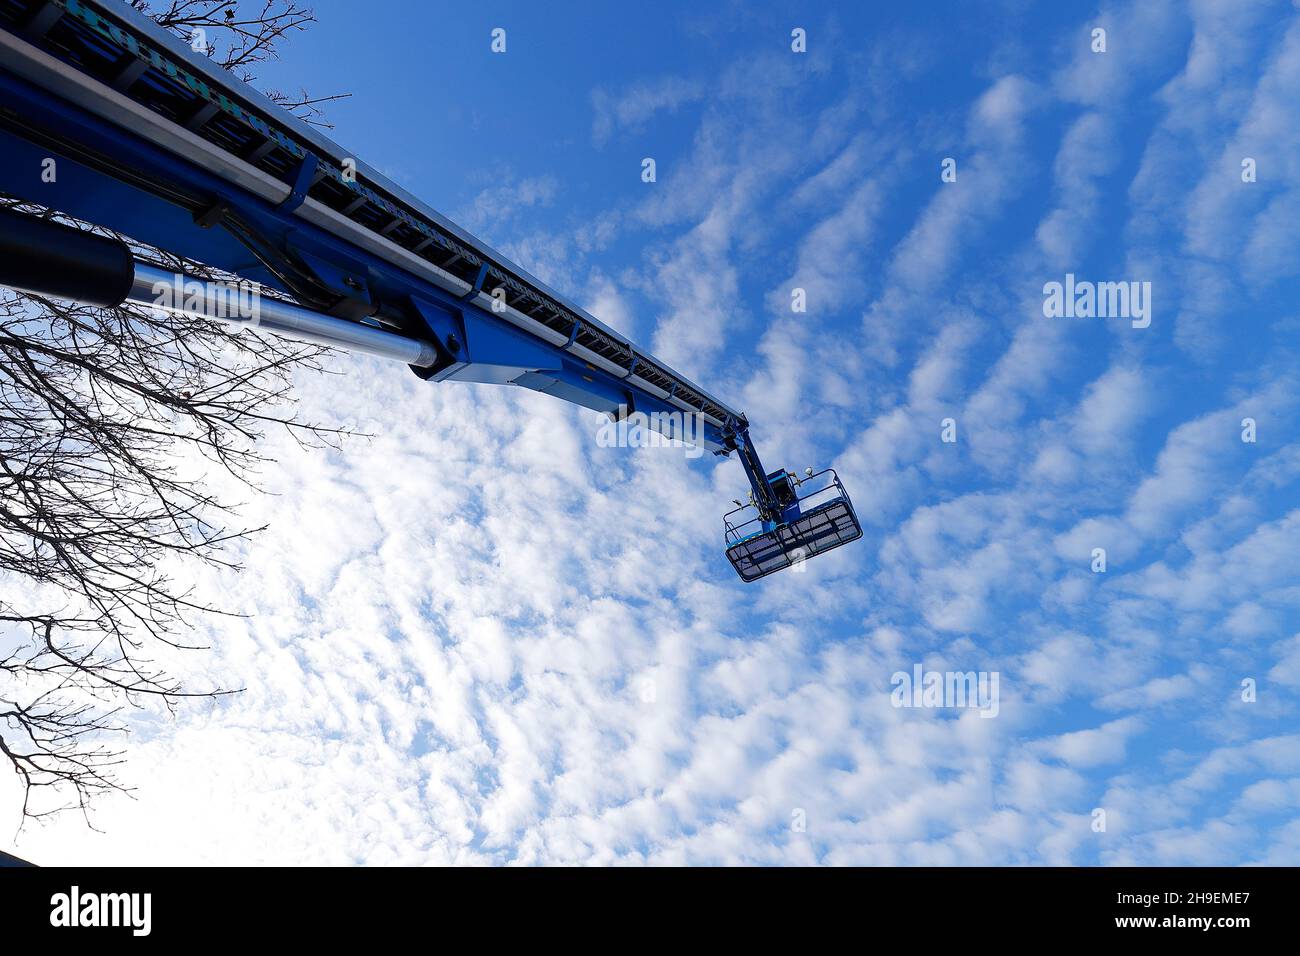 A Genie S125 boom lift against a cloudy blue sky Stock Photo